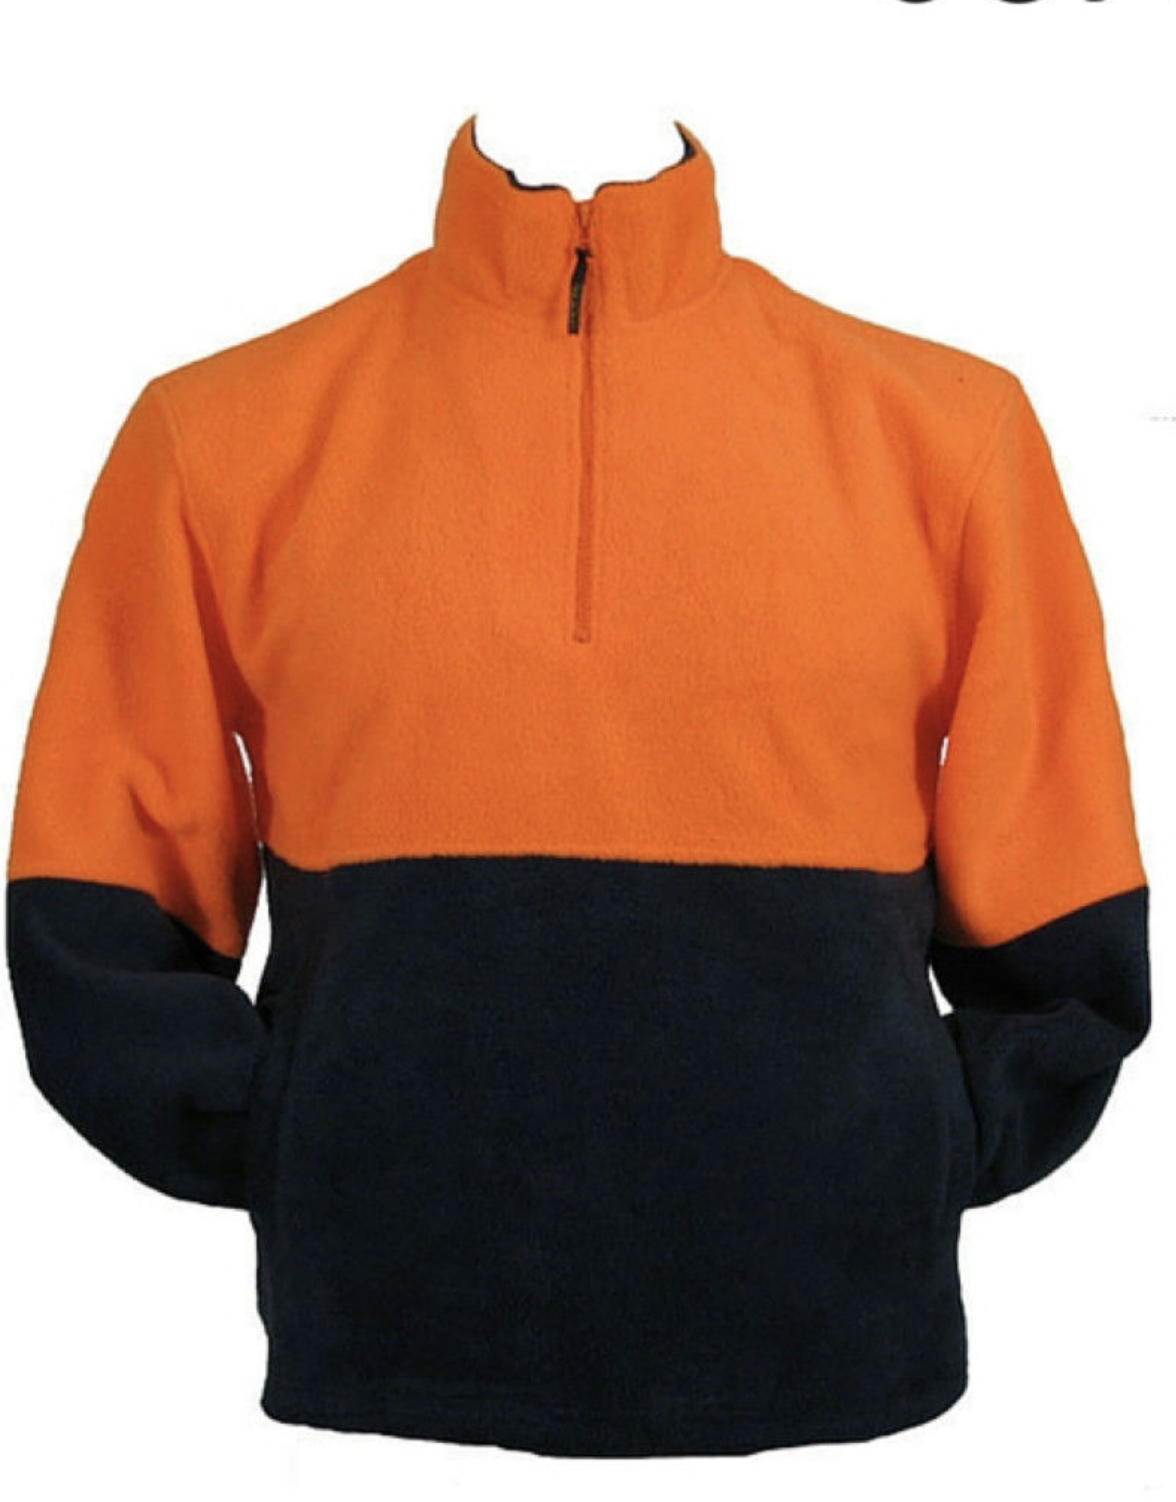 HI VIS POLAR FLEECE Jumper 1/2 Half Zip Safety Workwear Fleecy Jacket Unisex - Orange - L